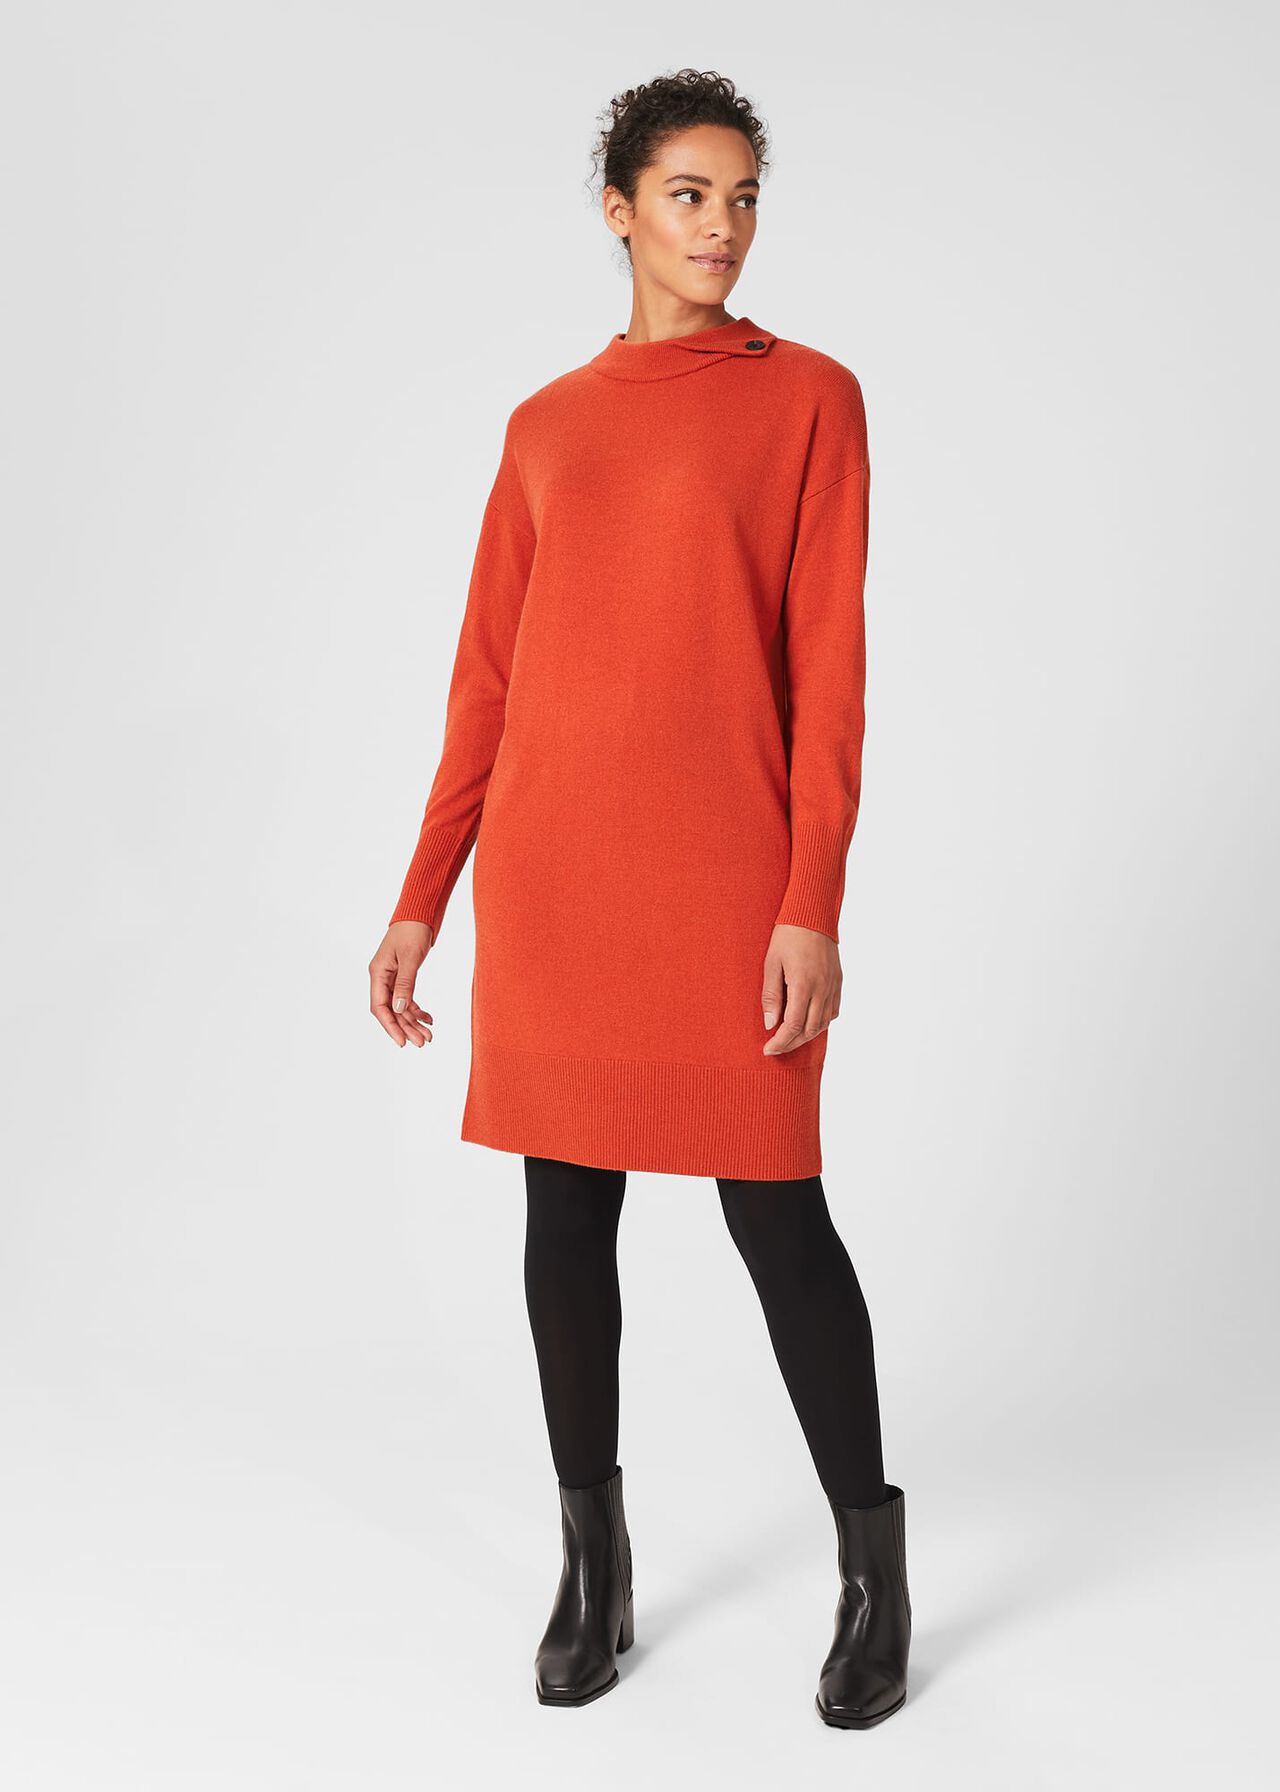 Talia Knitted Dress, Burnt Orange, hi-res